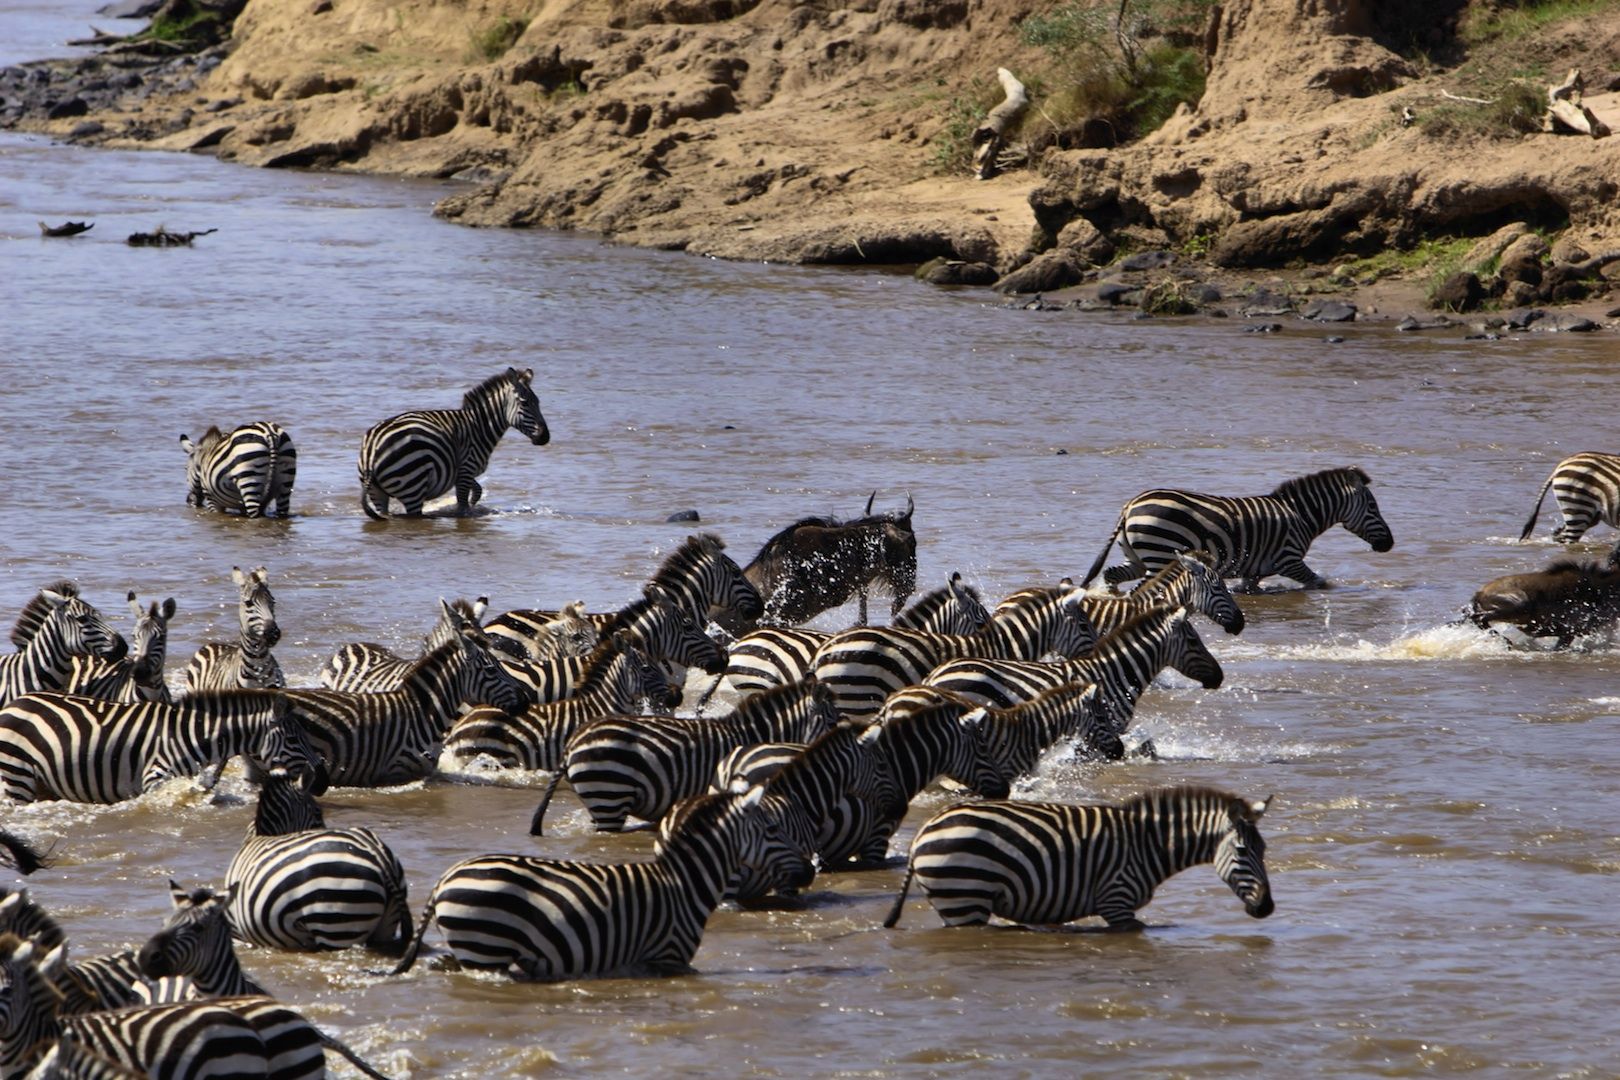 The Great Serengeti Migration